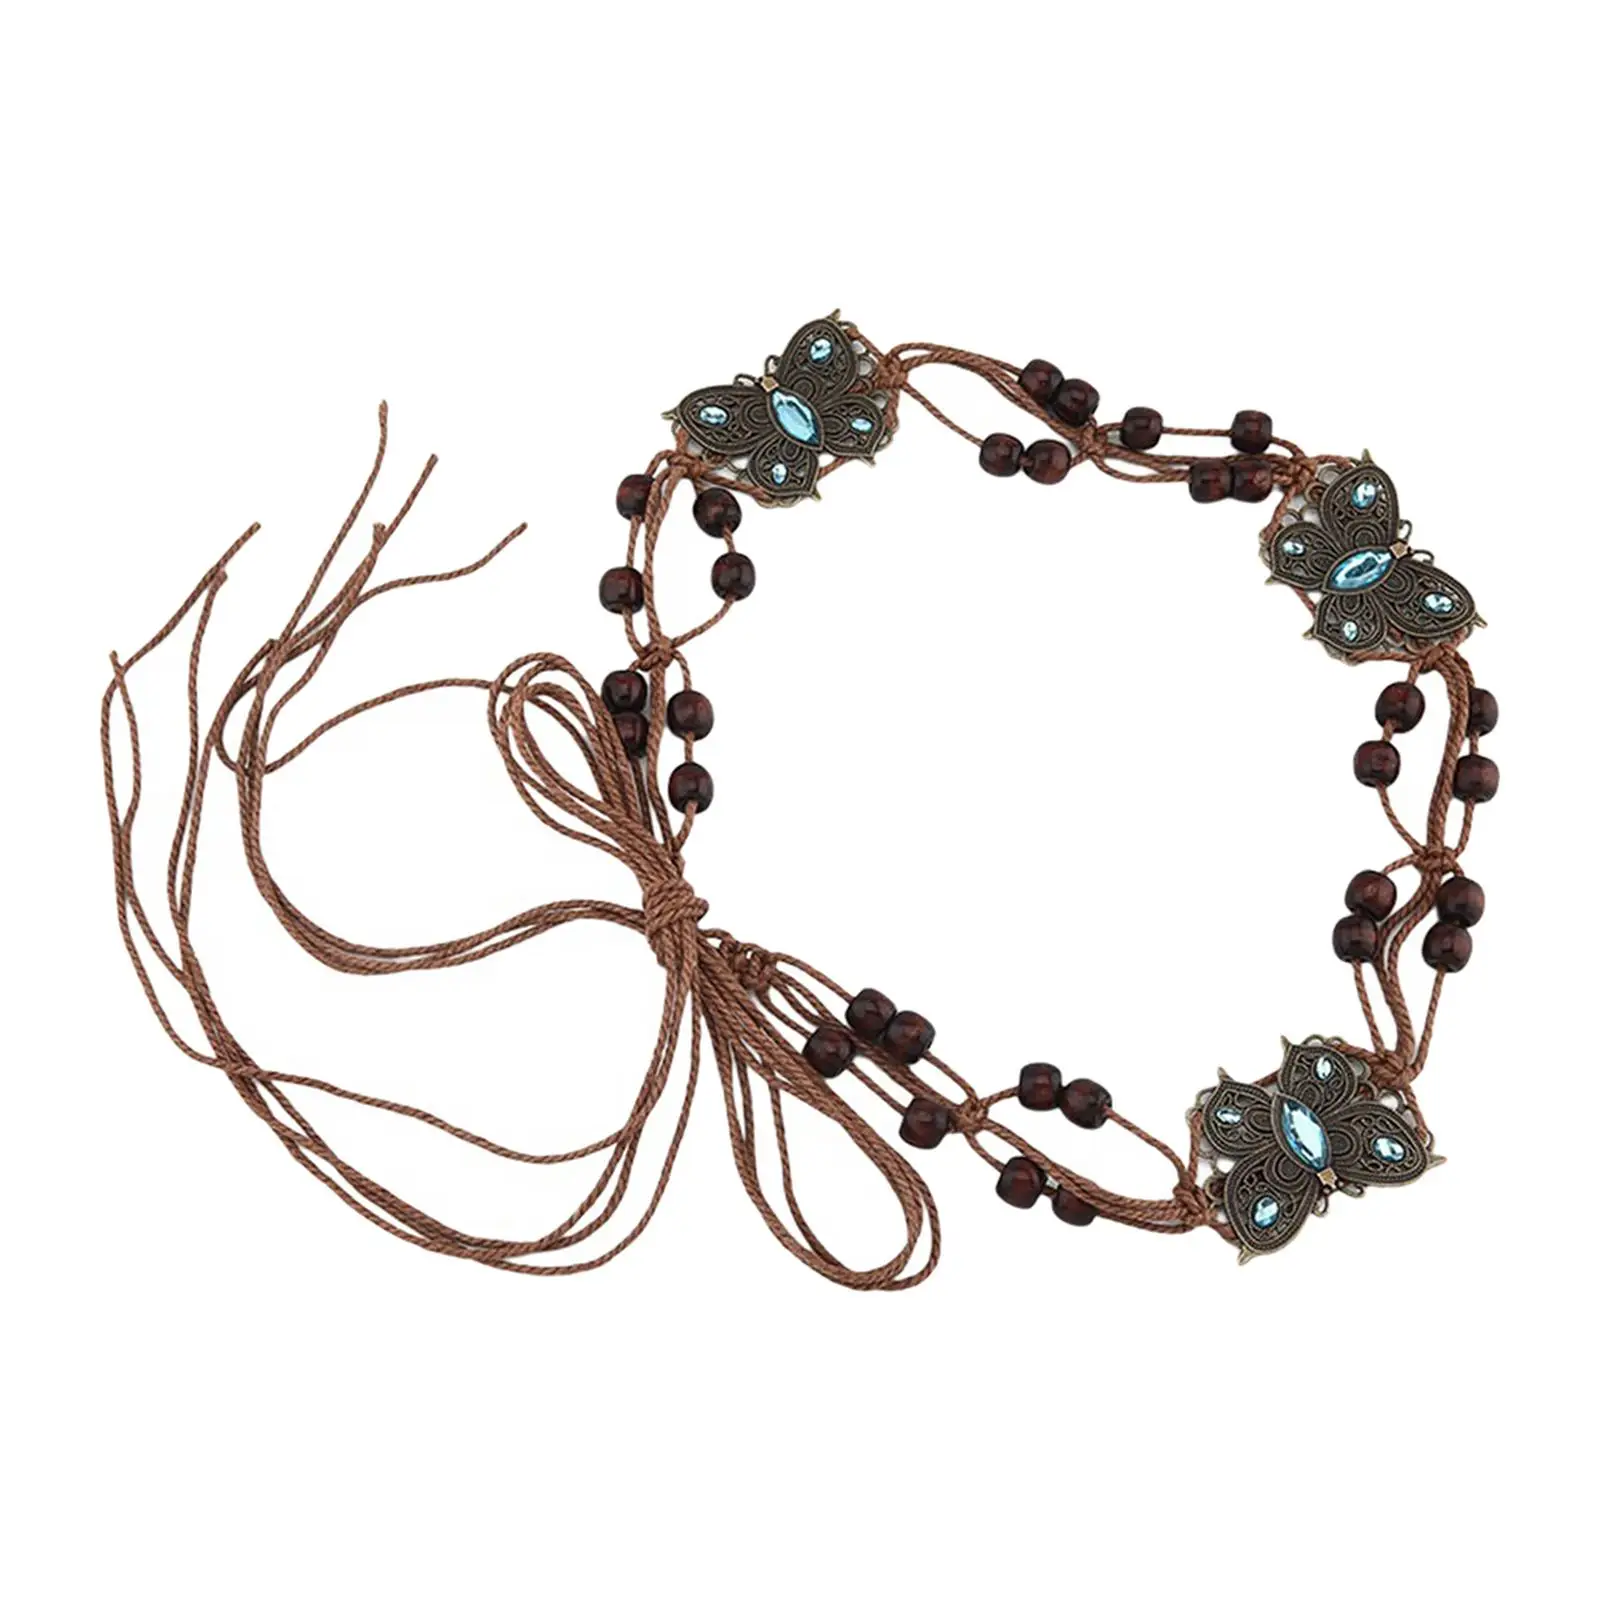 Boho Belt Adjustable Decorative Belt Ladies Skinny Belt Waistband Casual Wooden Beads Woven Waist Belts for Coats Dresses